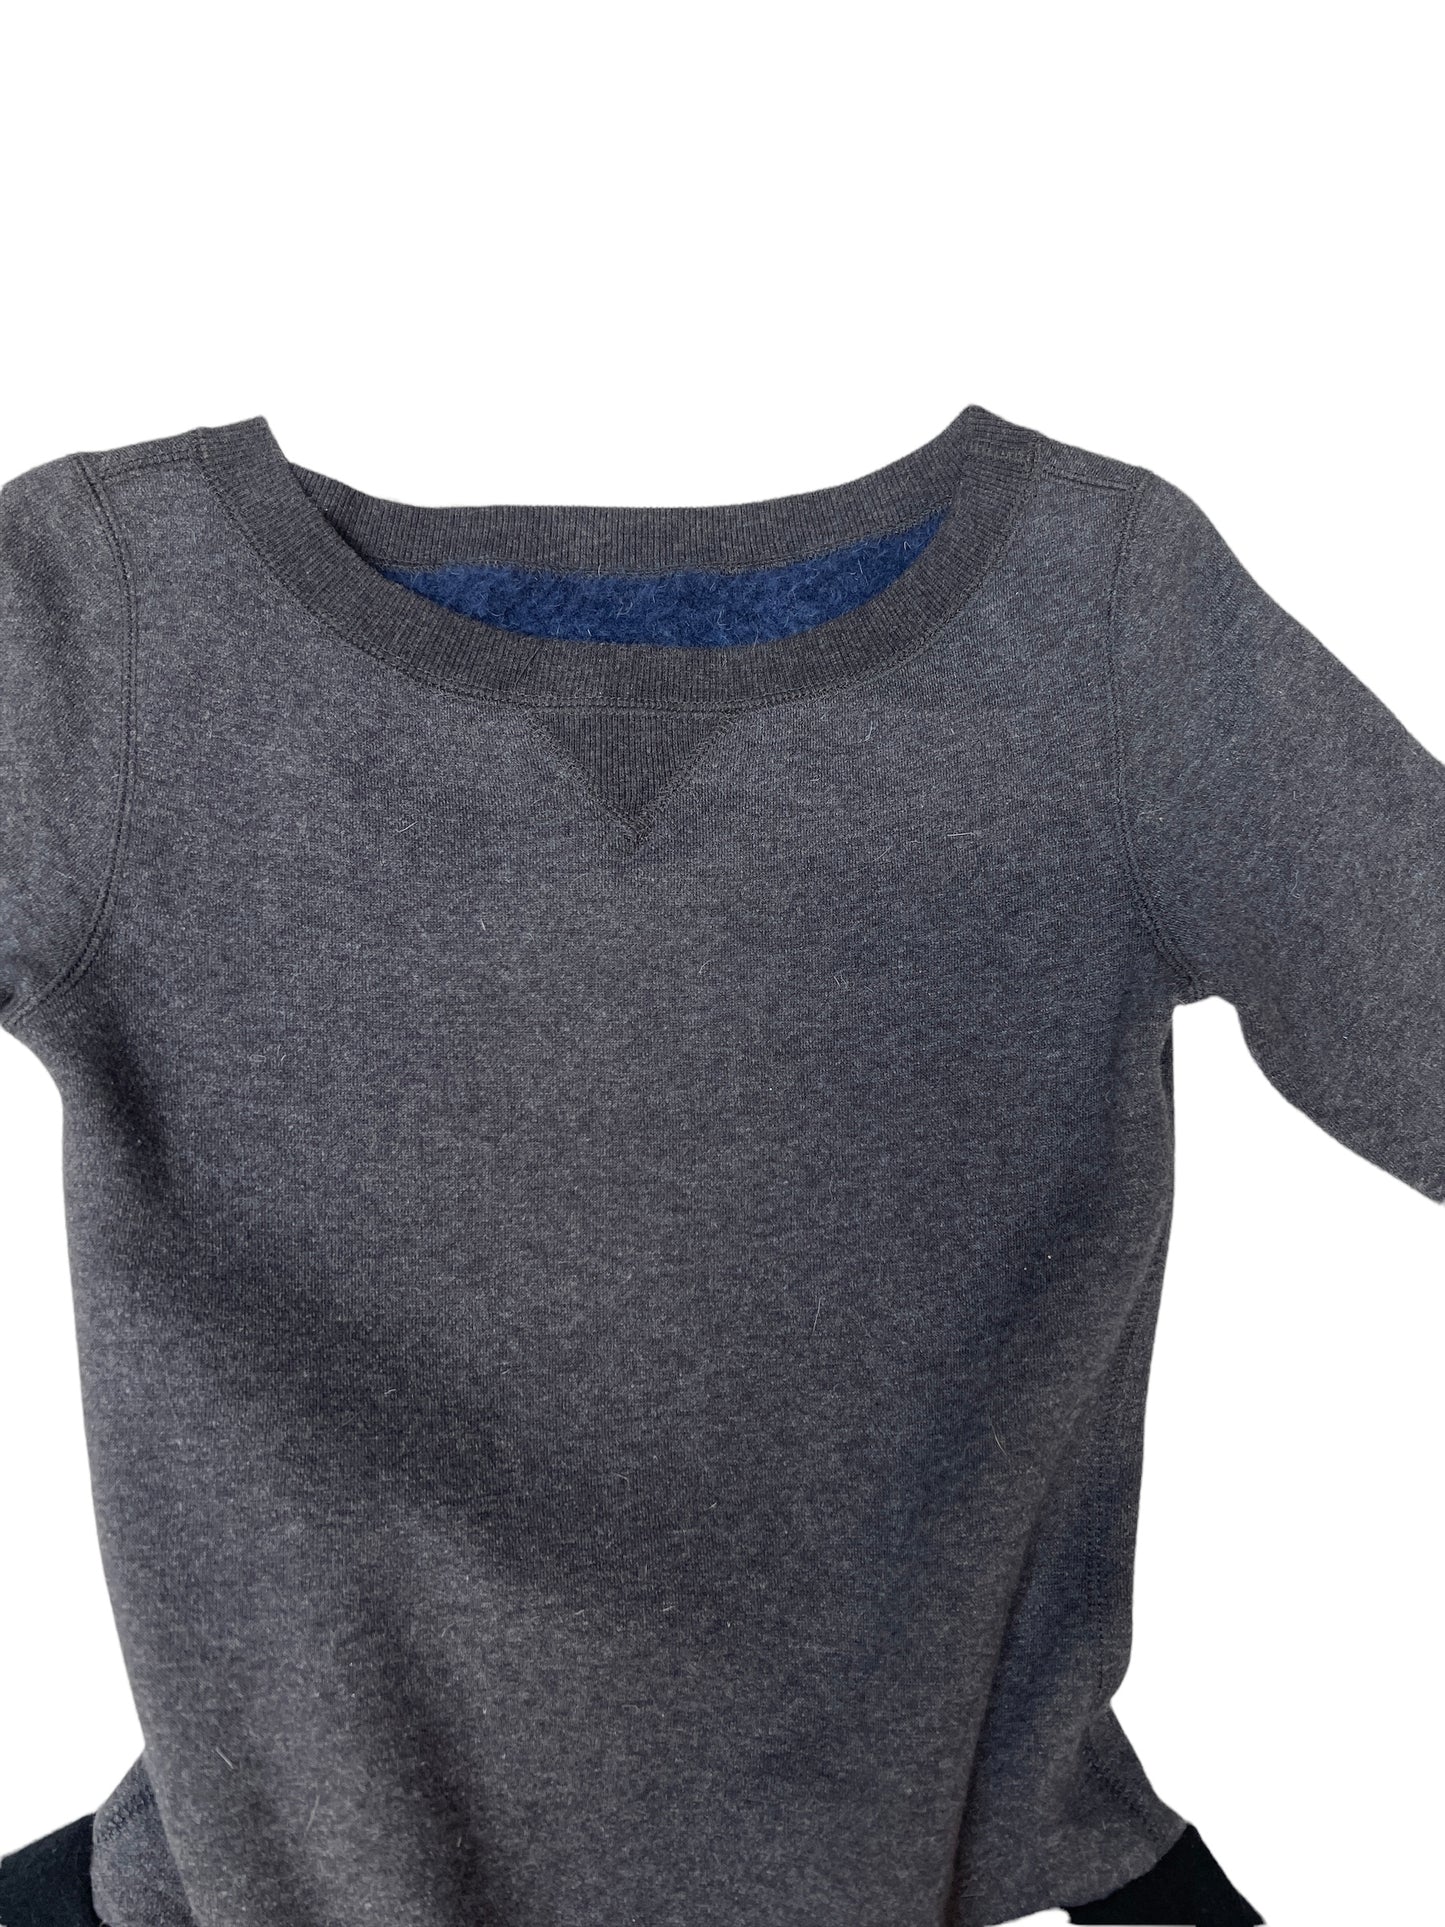 Grey Sweater Dress - 1